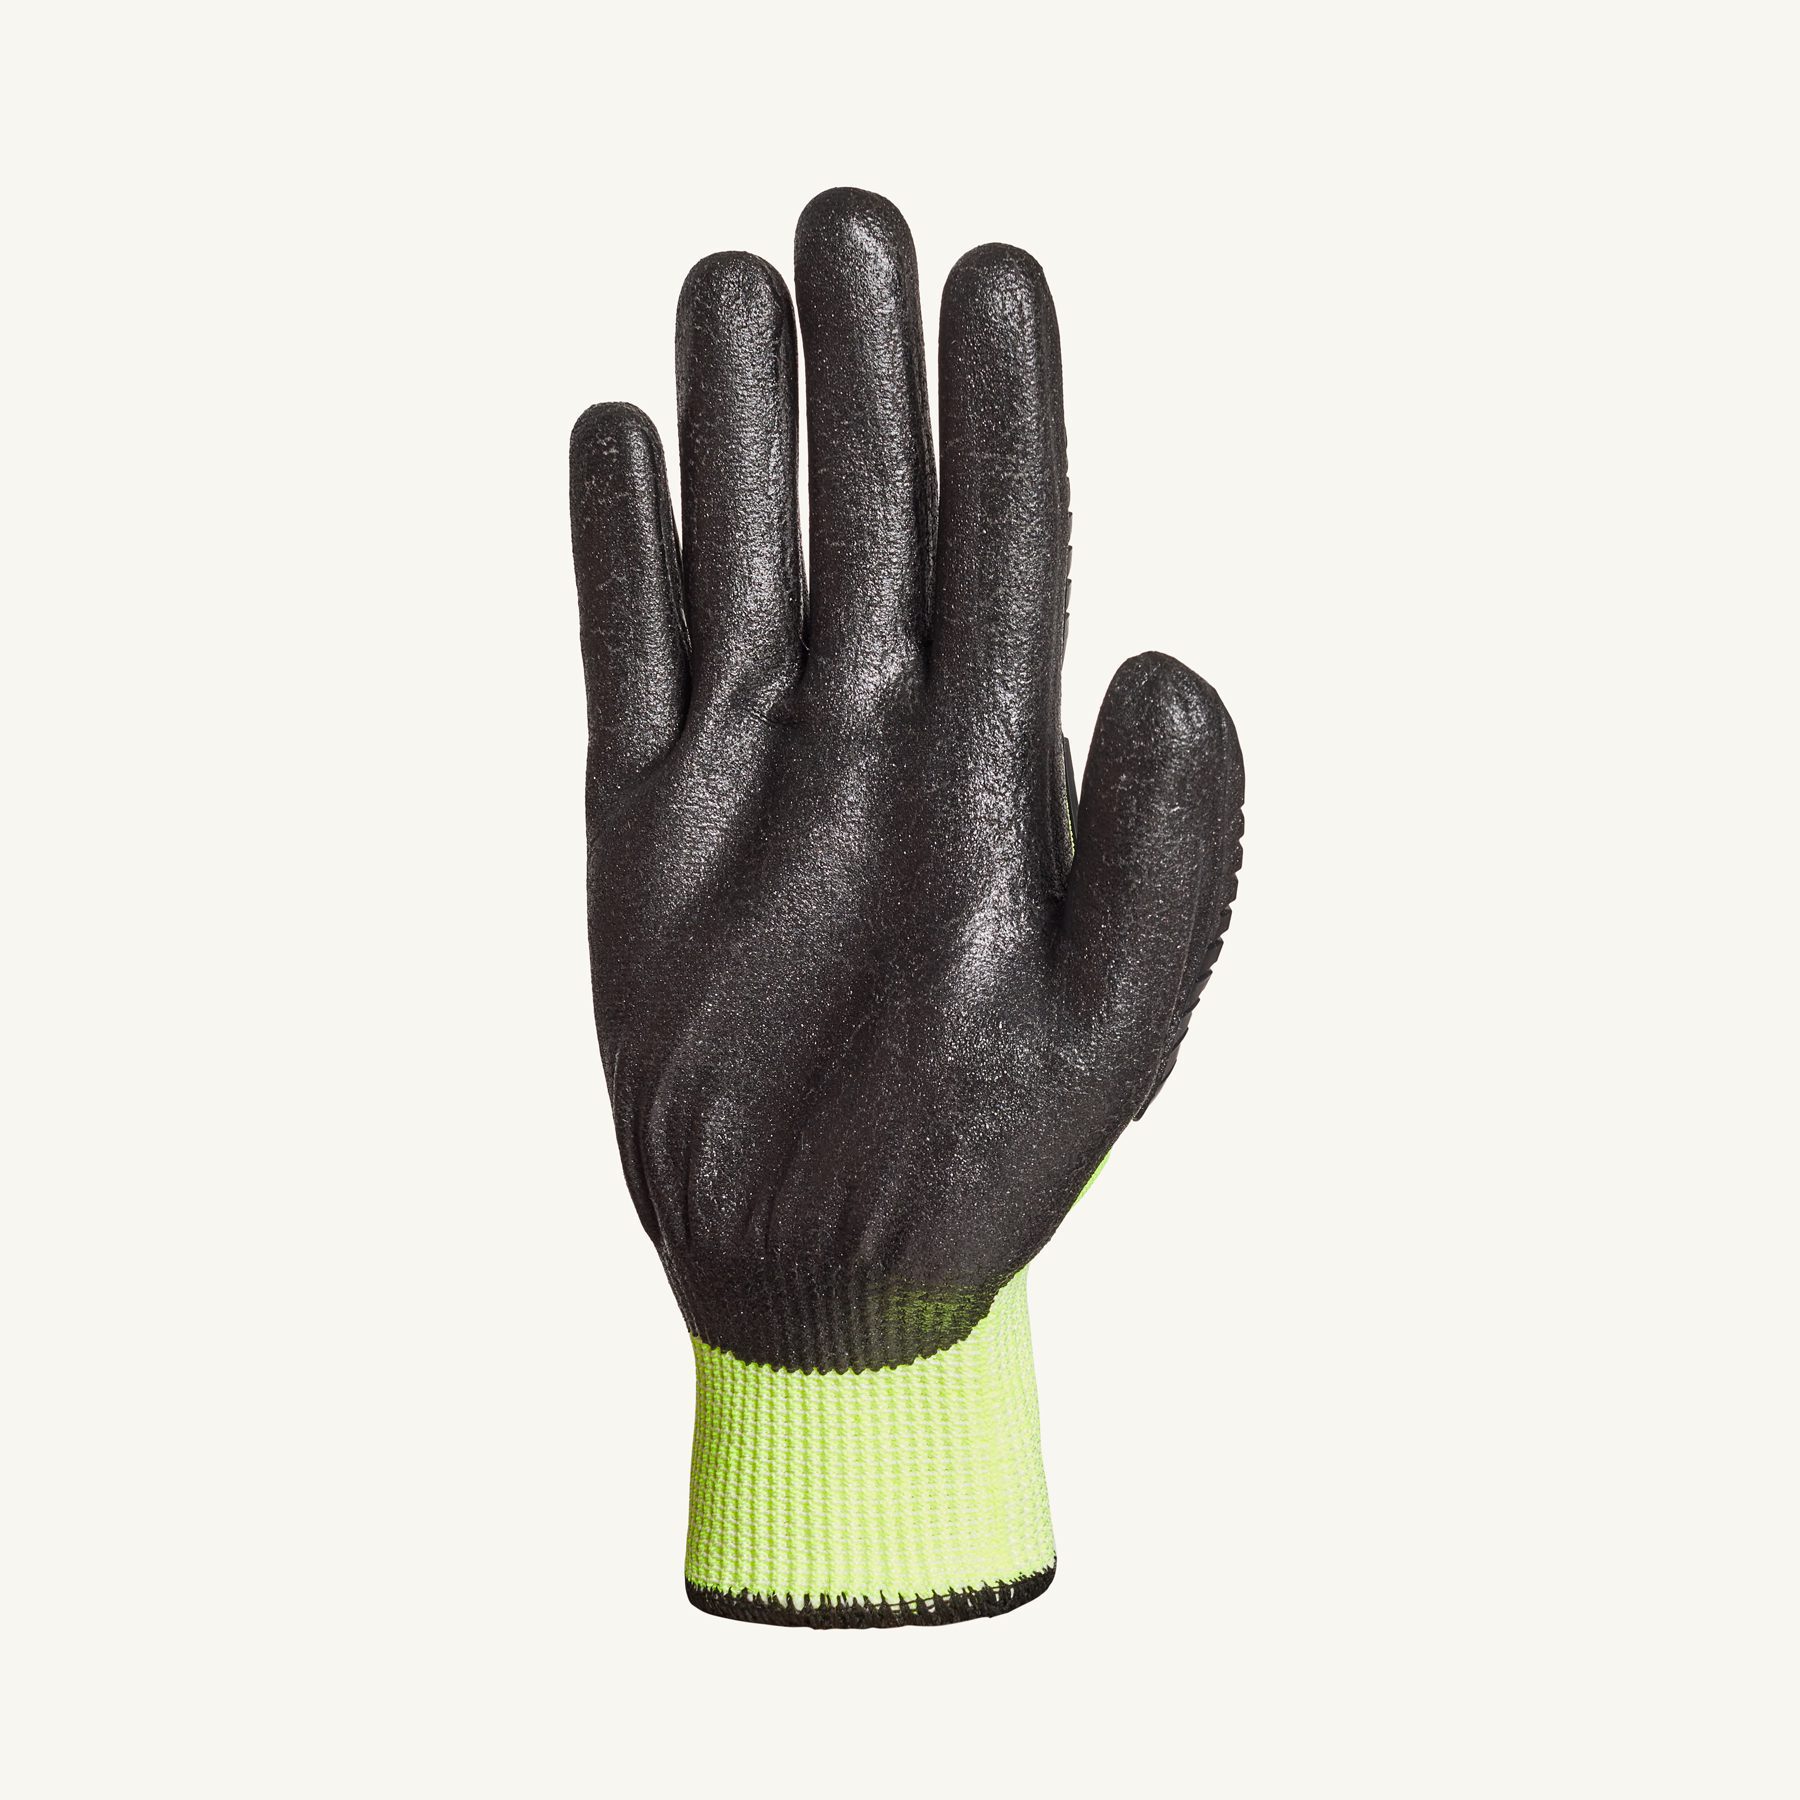 Superior Glove Tenactive Anti-impact cut resistant Nitrile Palm D3O back size XL 